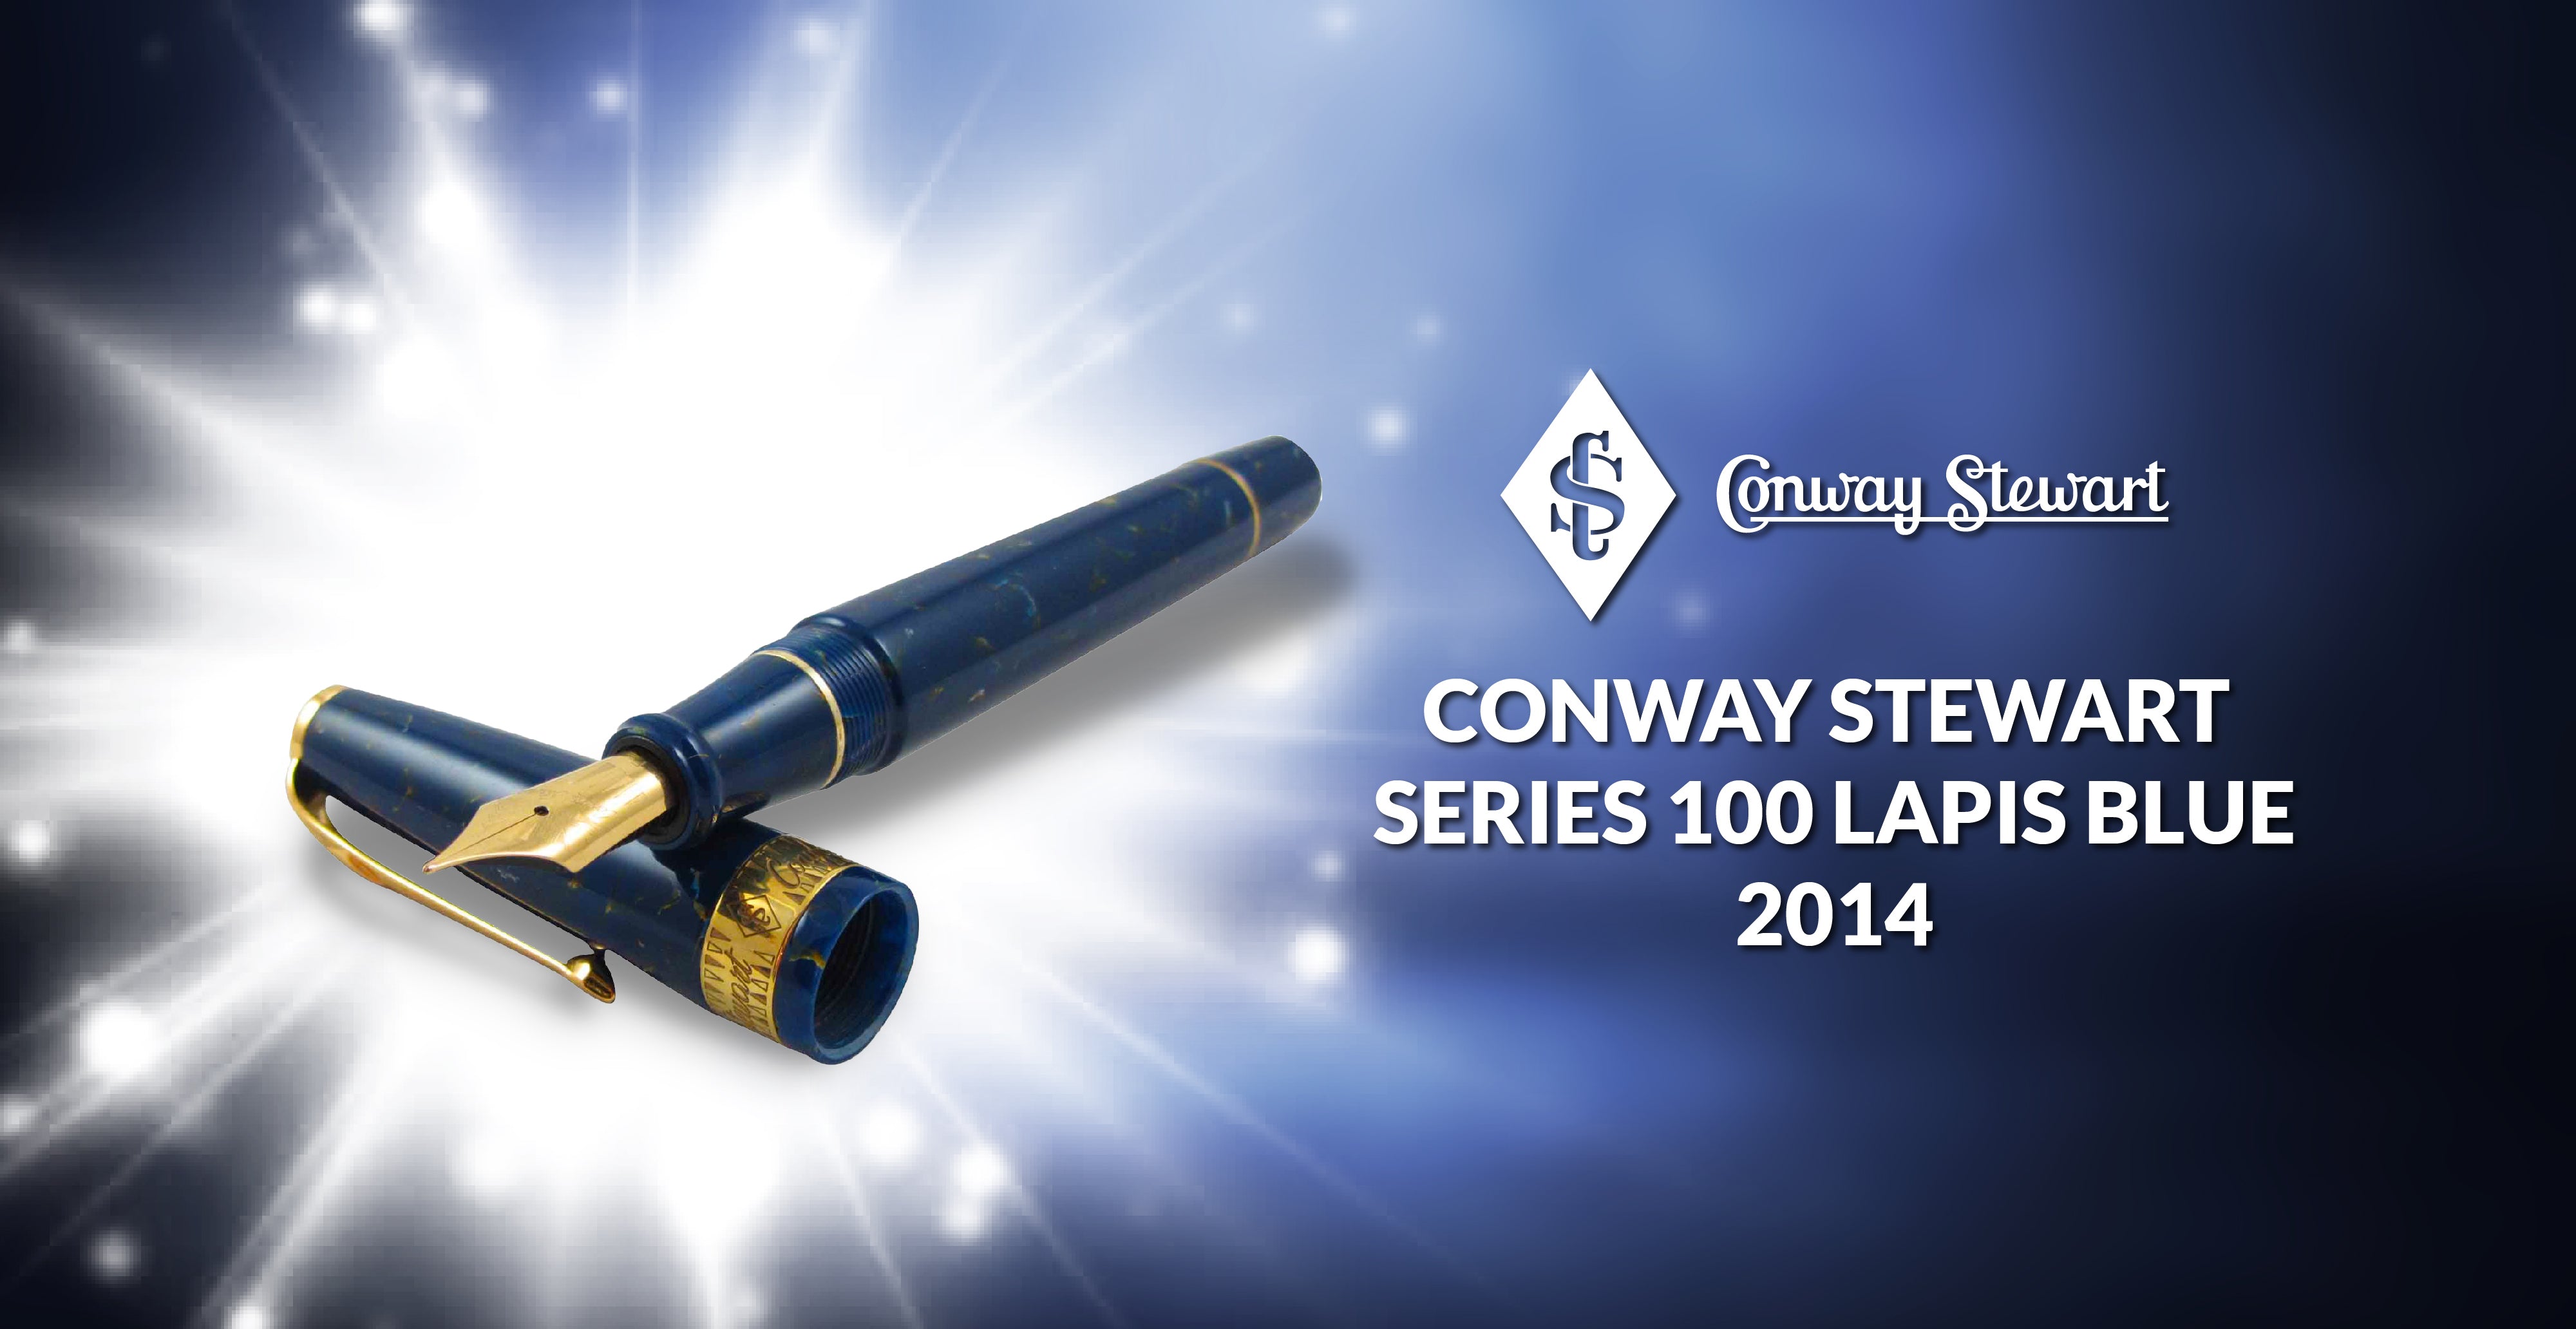 Conway Stewart Series 100 Lapis Blue, 2014 - Conway Stewart